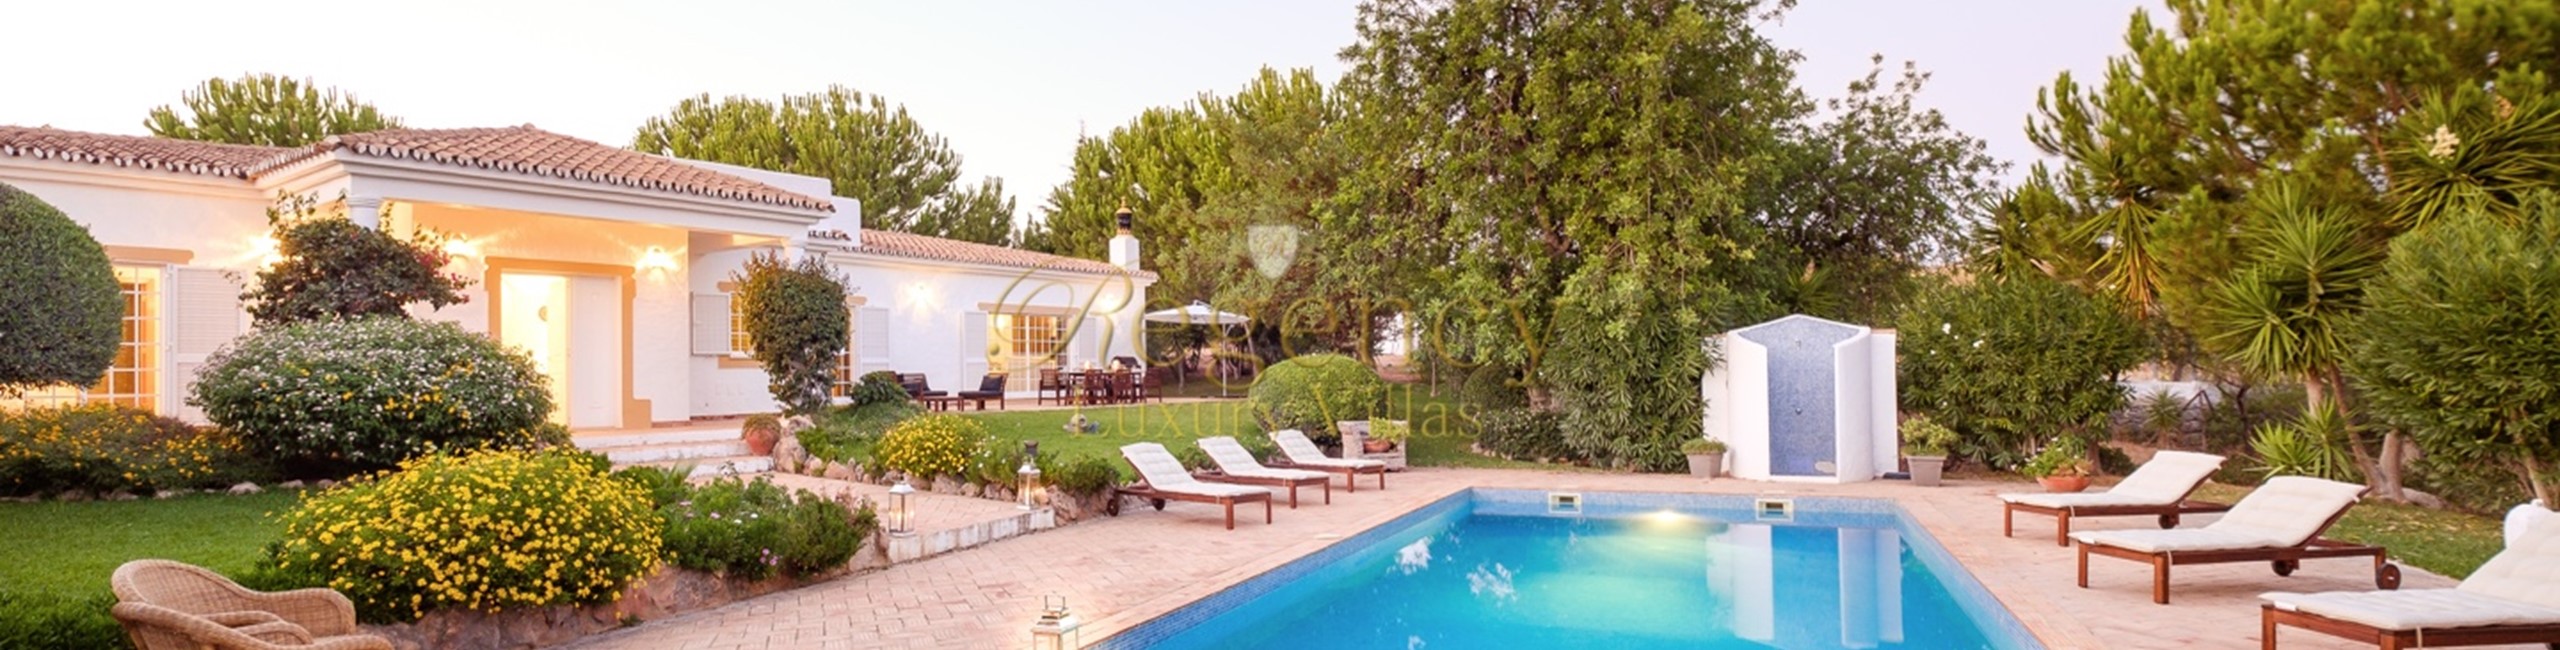 Villas To Rent In The Algarve 4 Bedrooms